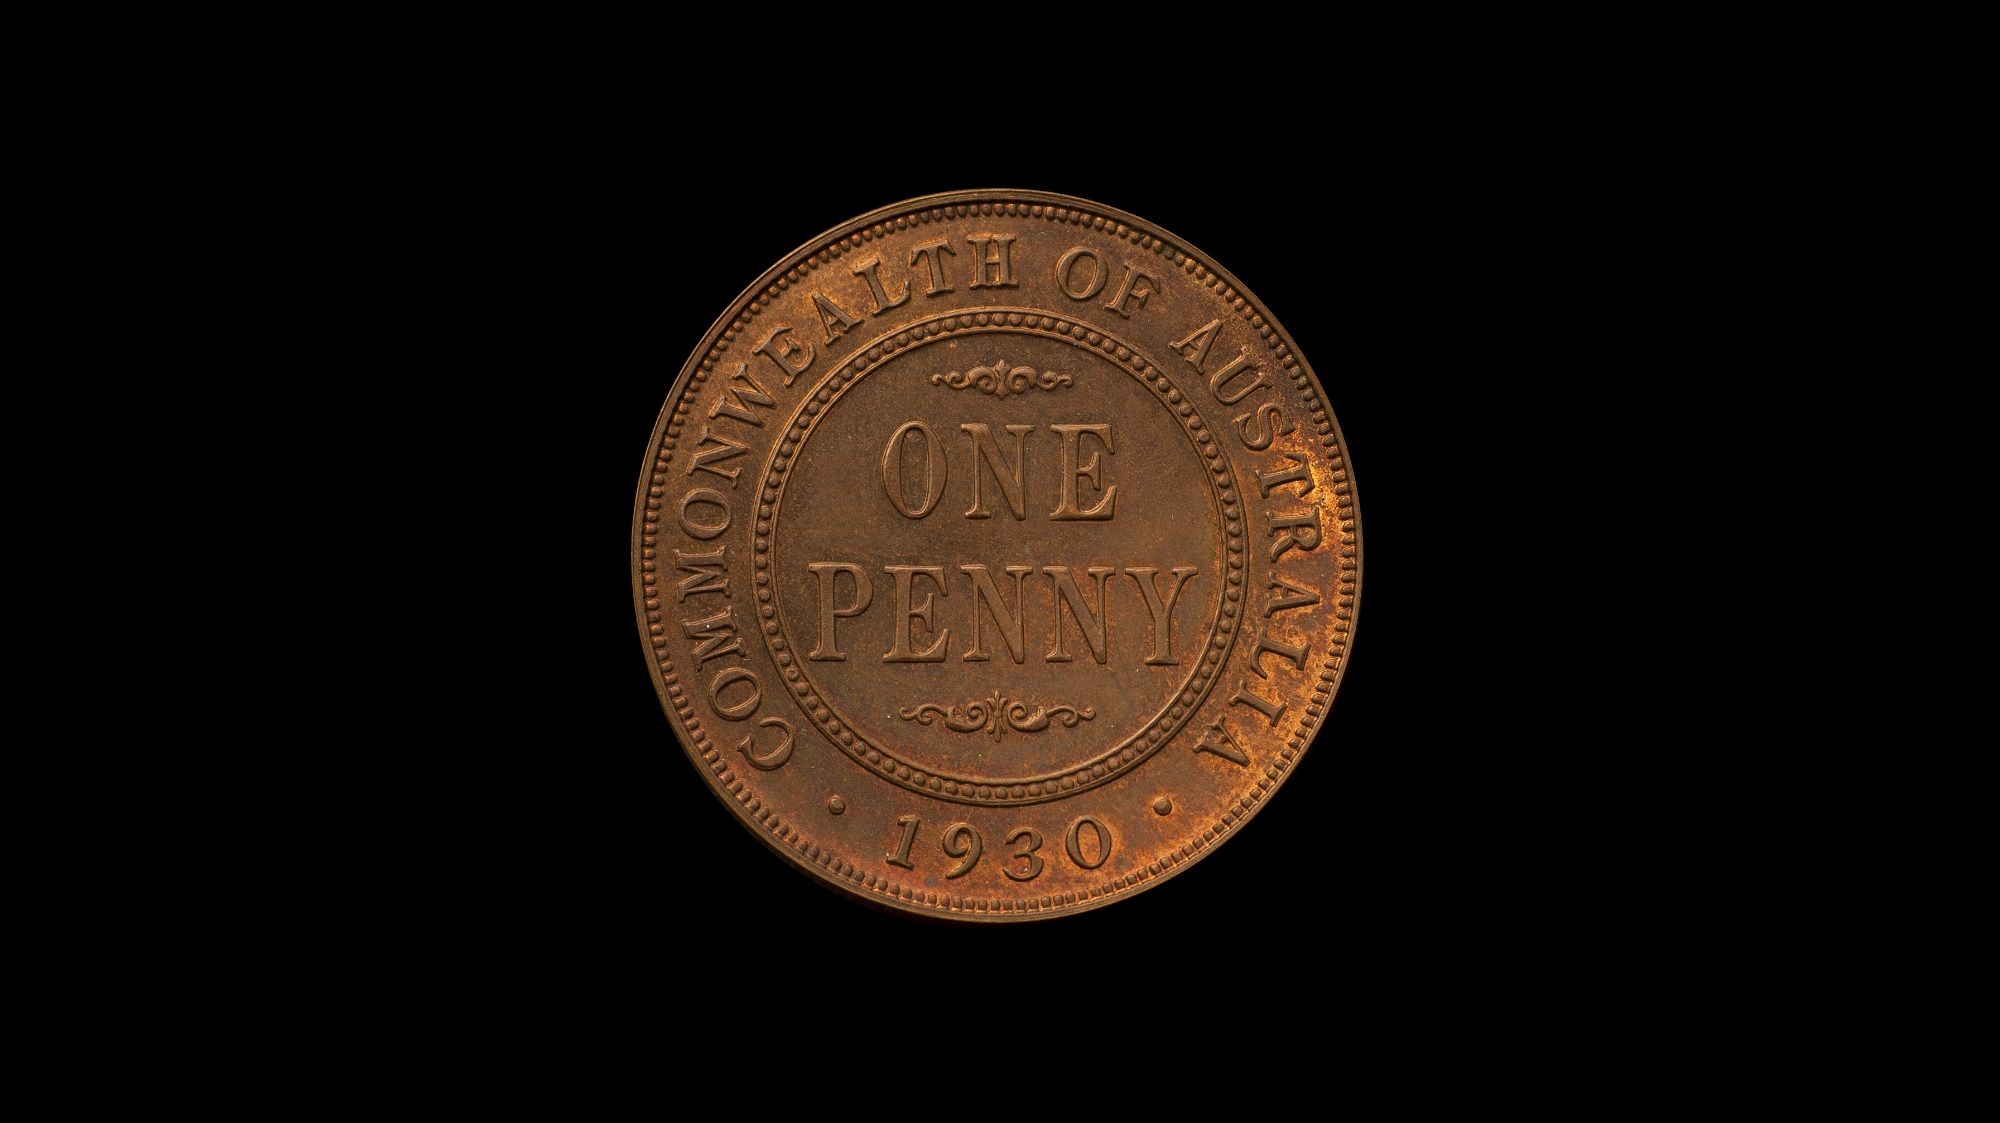 1930 Proof Penny Reverse February 2019